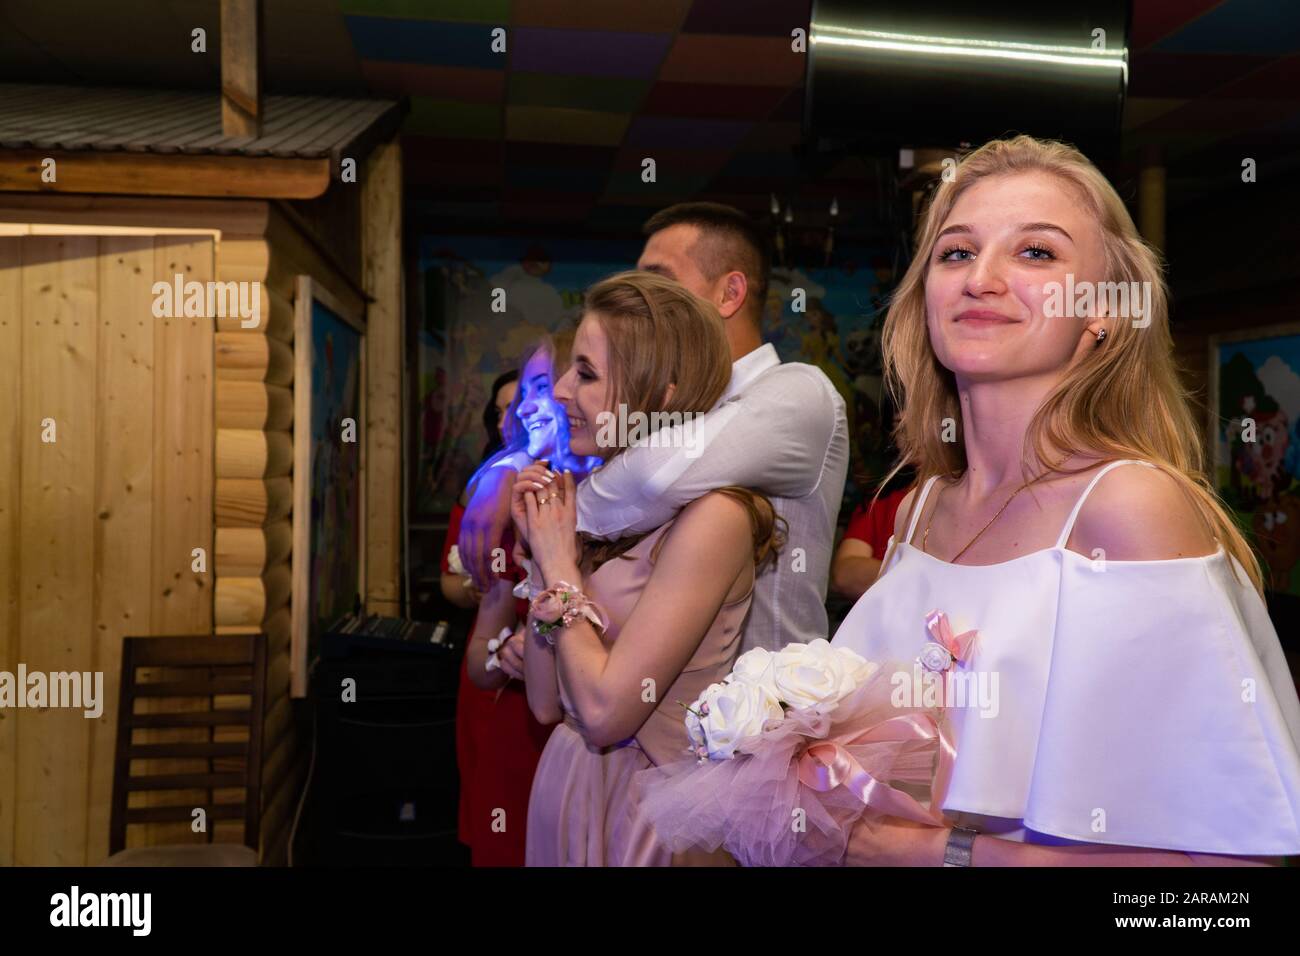 modern Ukrainian Wedding Ukraine Lutsk 02.09.2018. Stock Photo